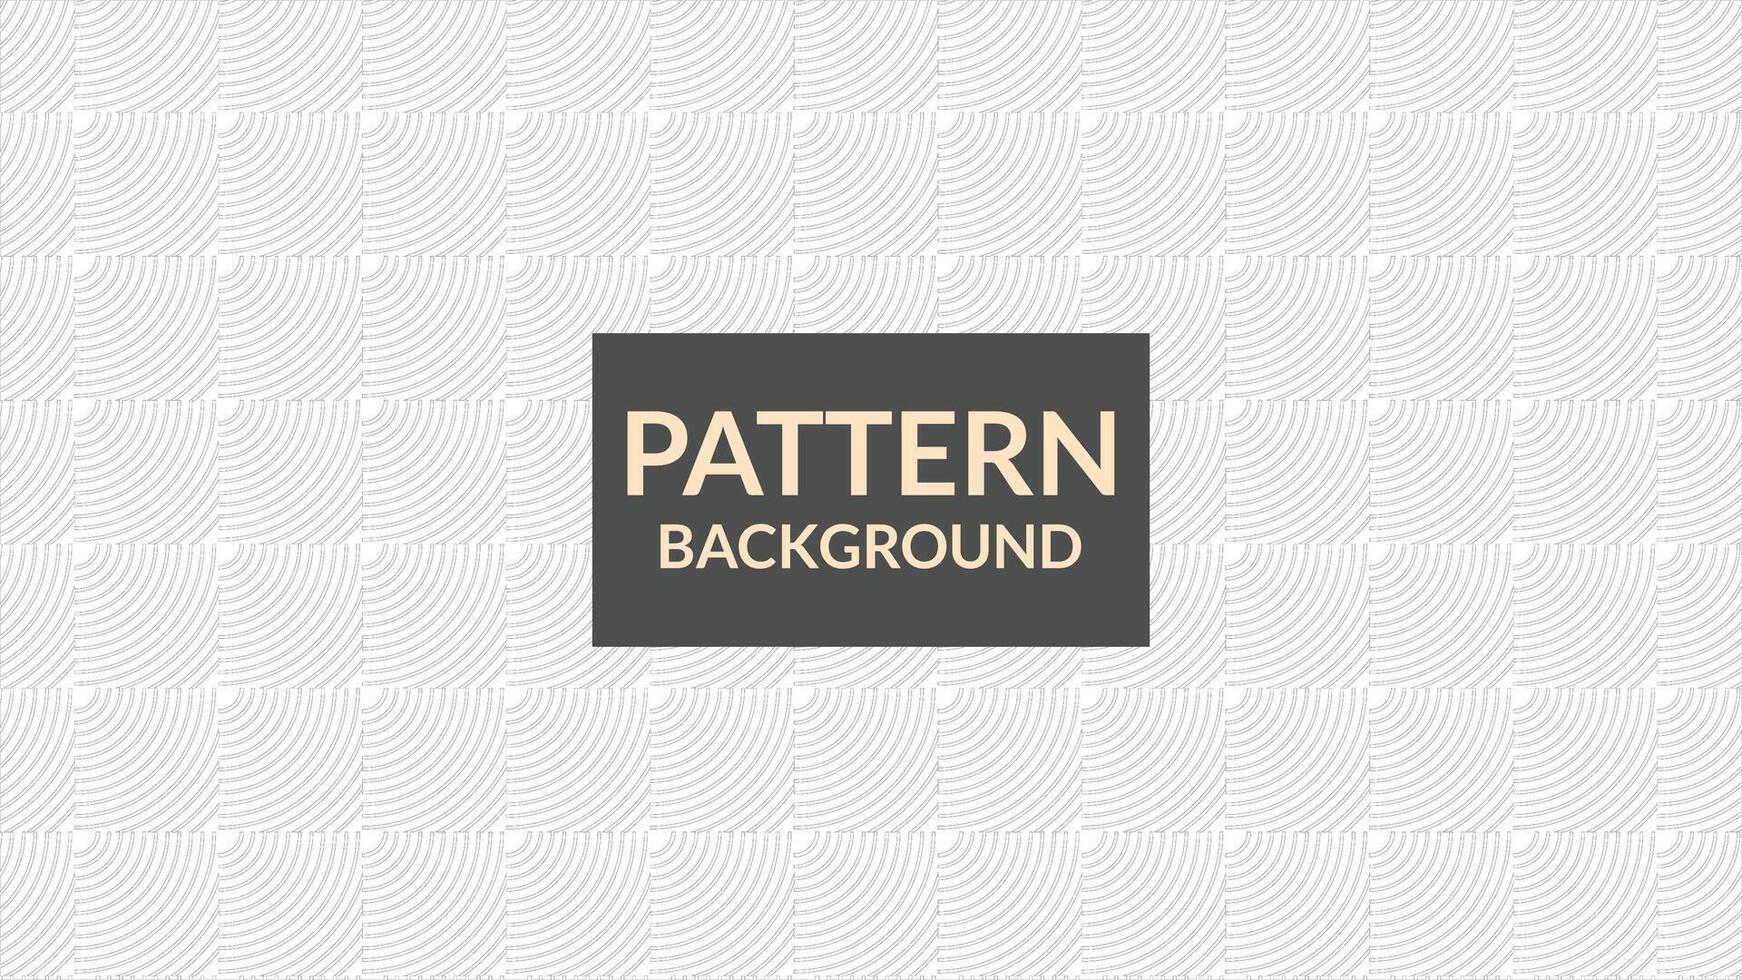 elegant geometric pattern background vector design. multipurpose uses.